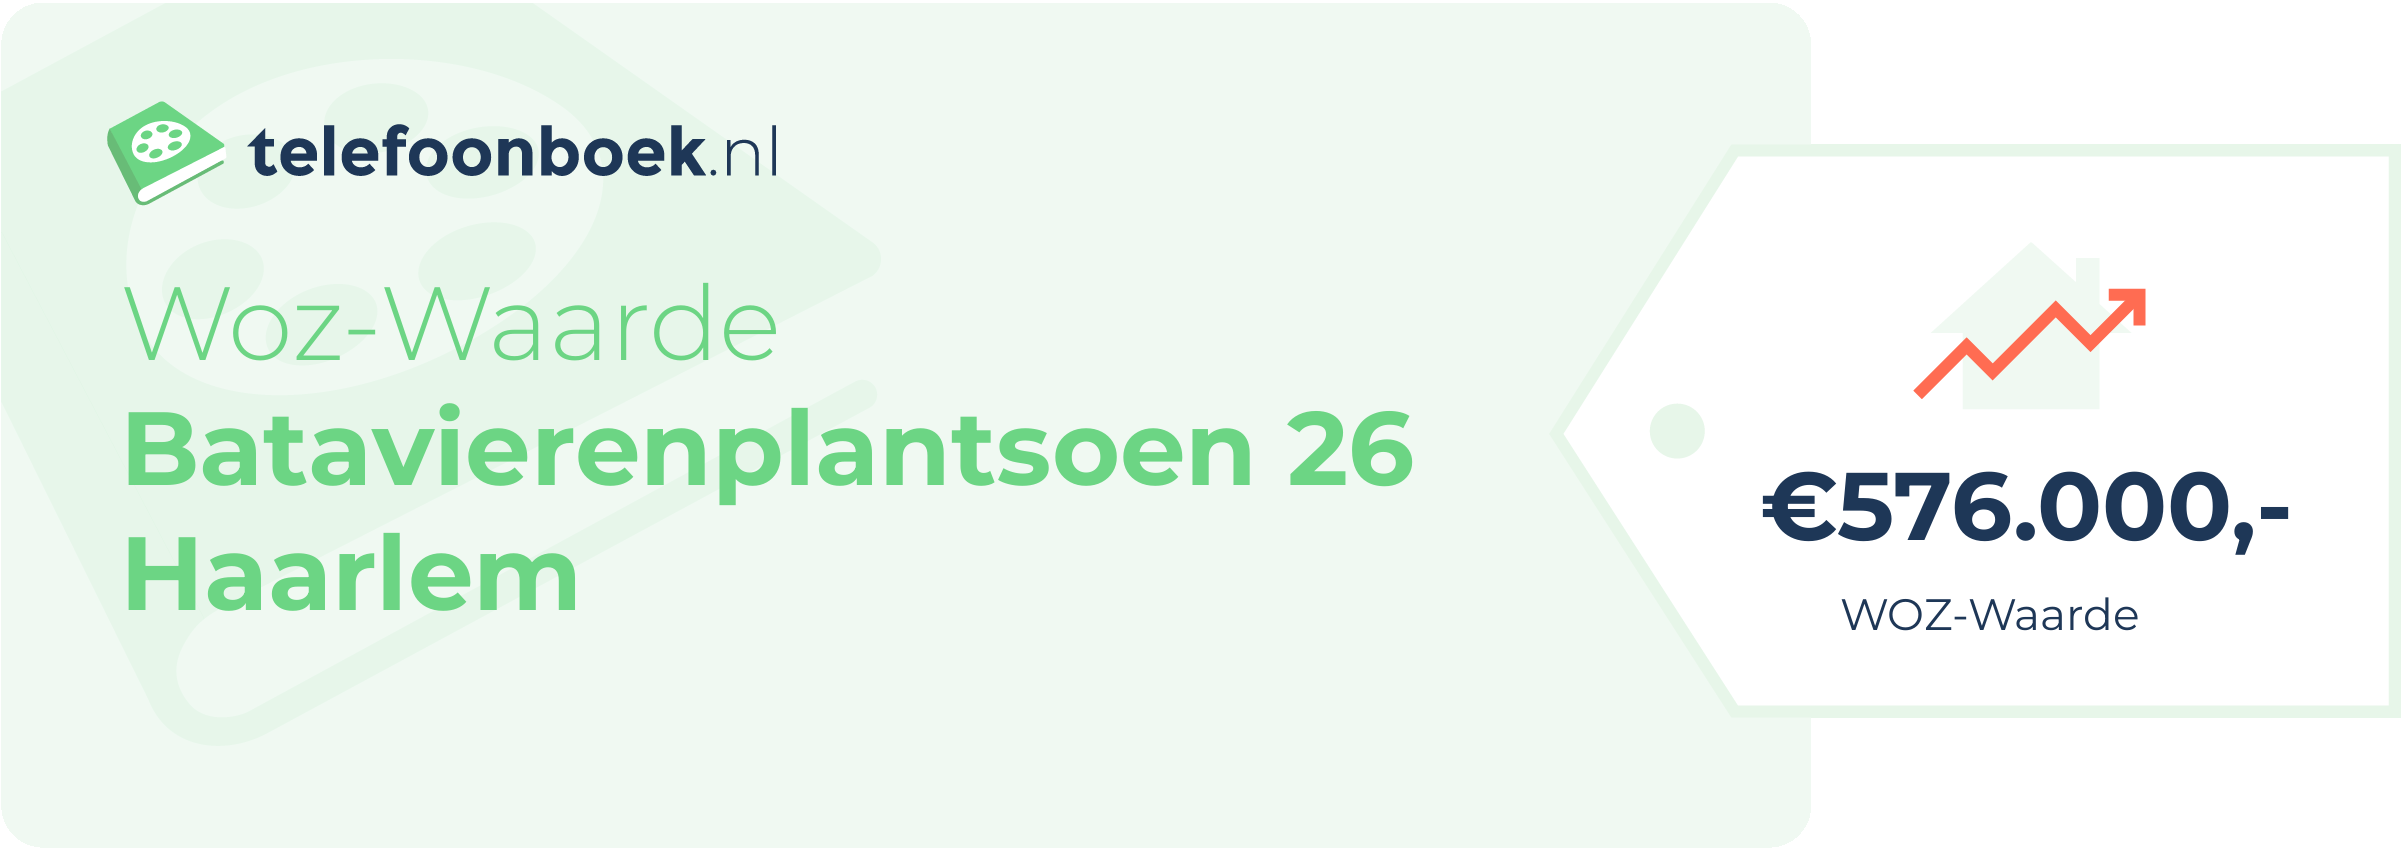 WOZ-waarde Batavierenplantsoen 26 Haarlem